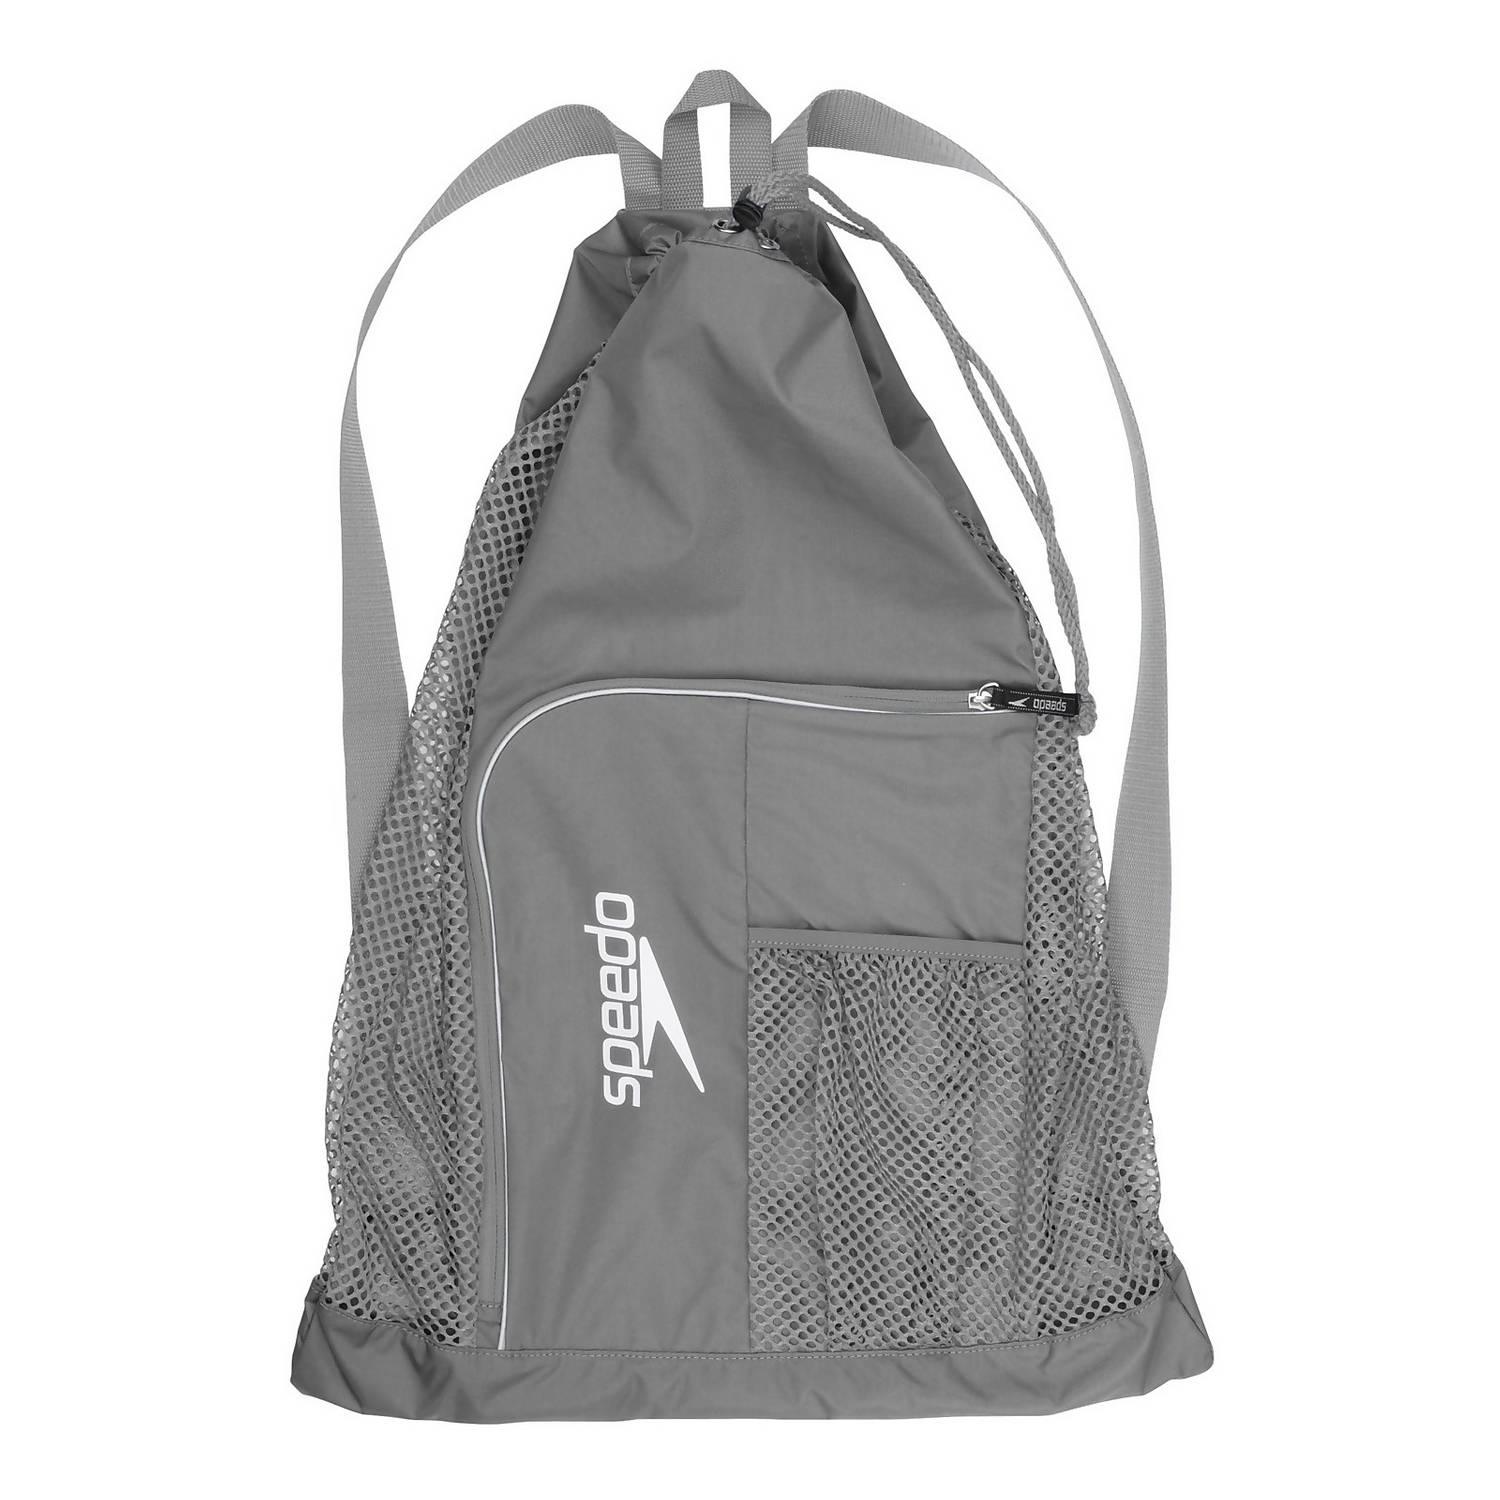 Swim Bags / Backpacks  Xtreme Swim - Save on Swim Gear